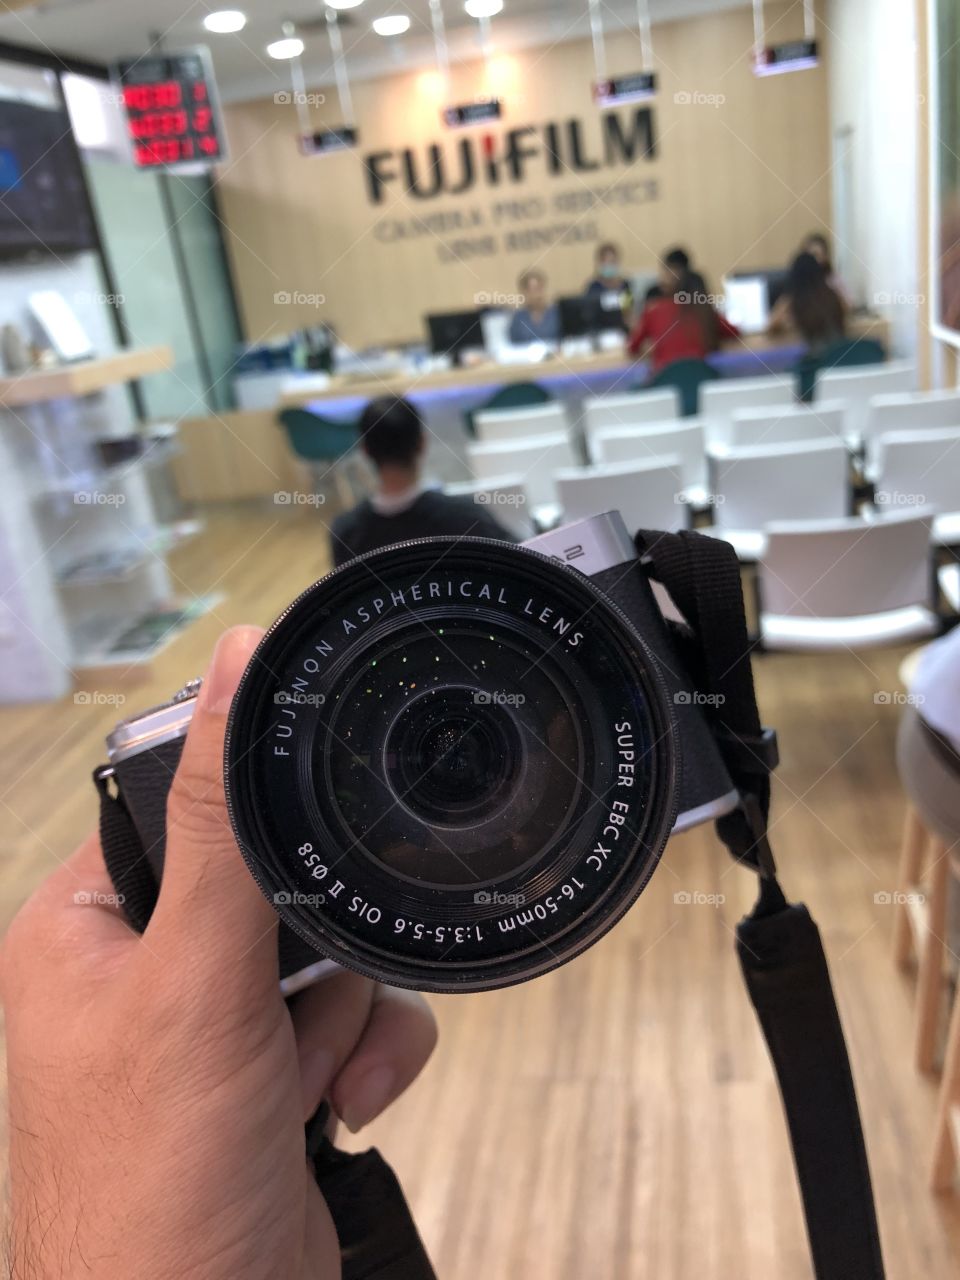 fujifilm digital camera